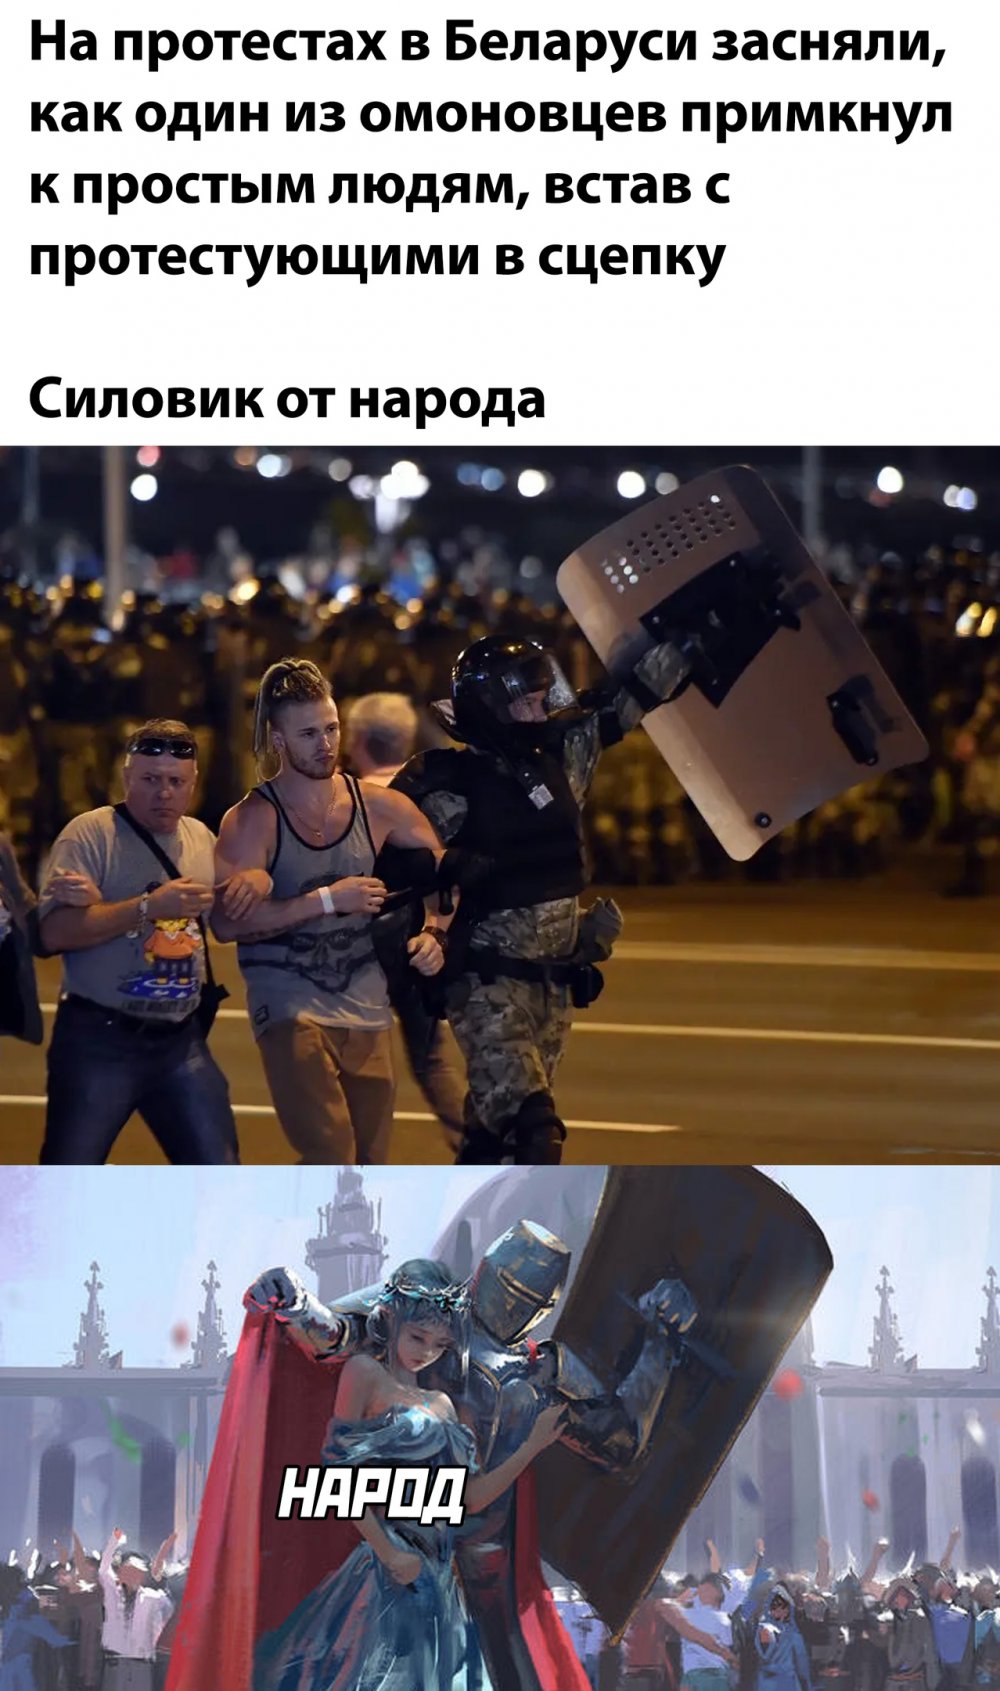 Мемы про Беларусь